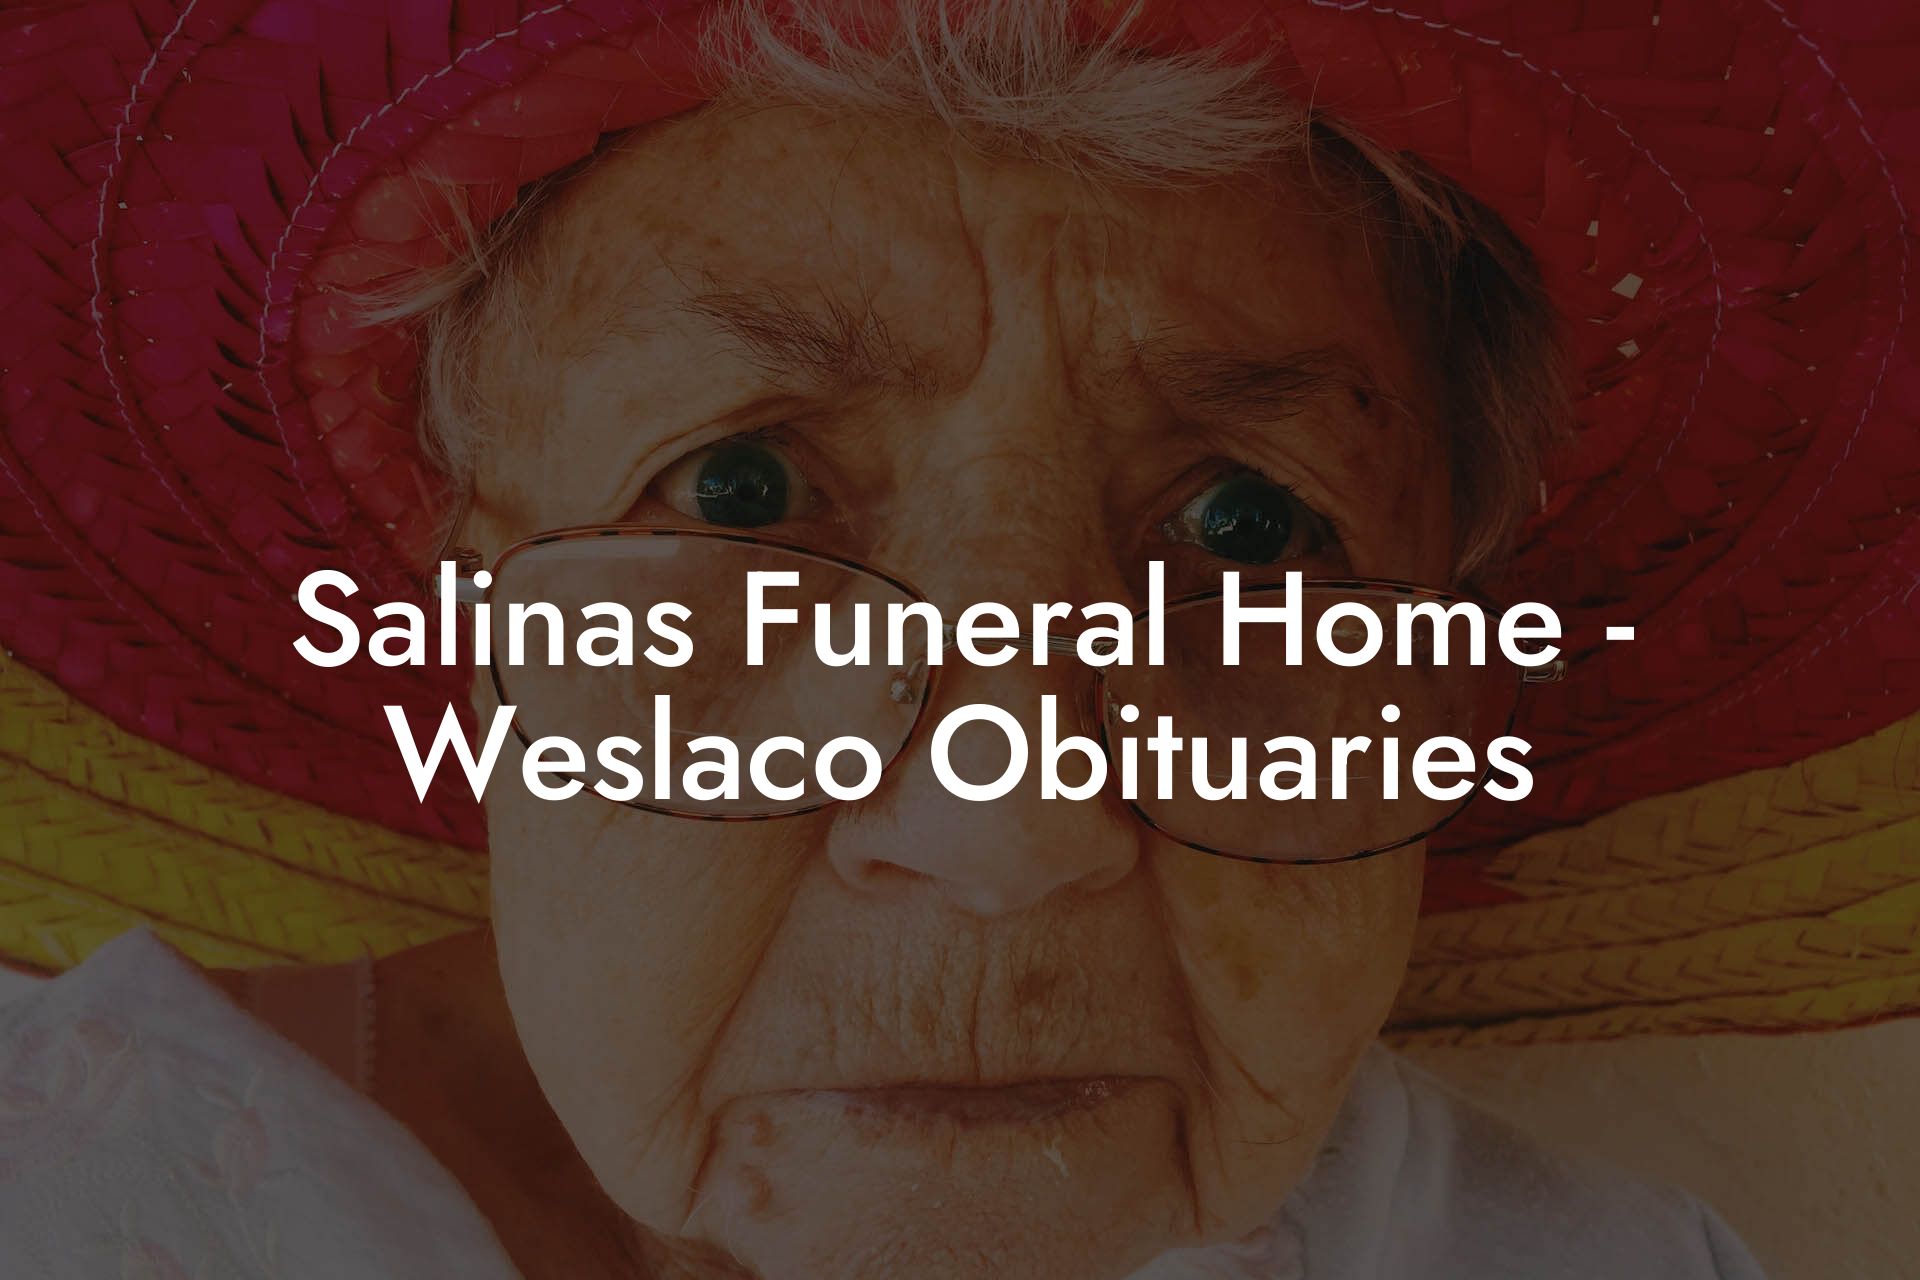 Salinas Funeral Home - Weslaco Obituaries